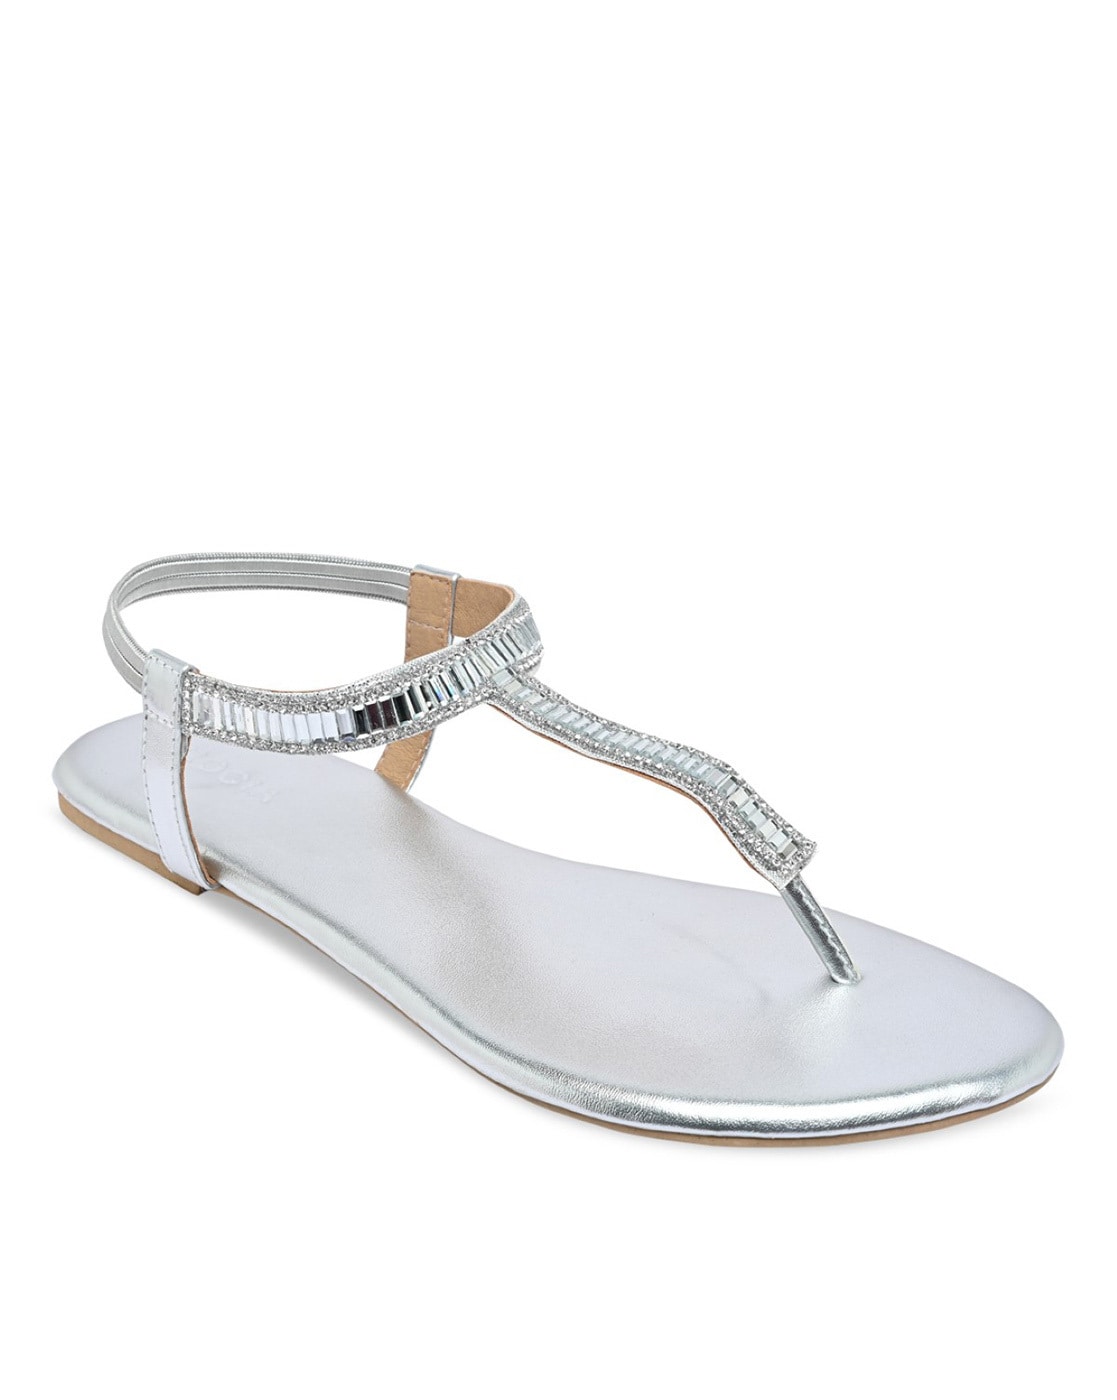 Betsy Johnson Alta - Silver Sandals - Rhinestone Sandals - Lulus